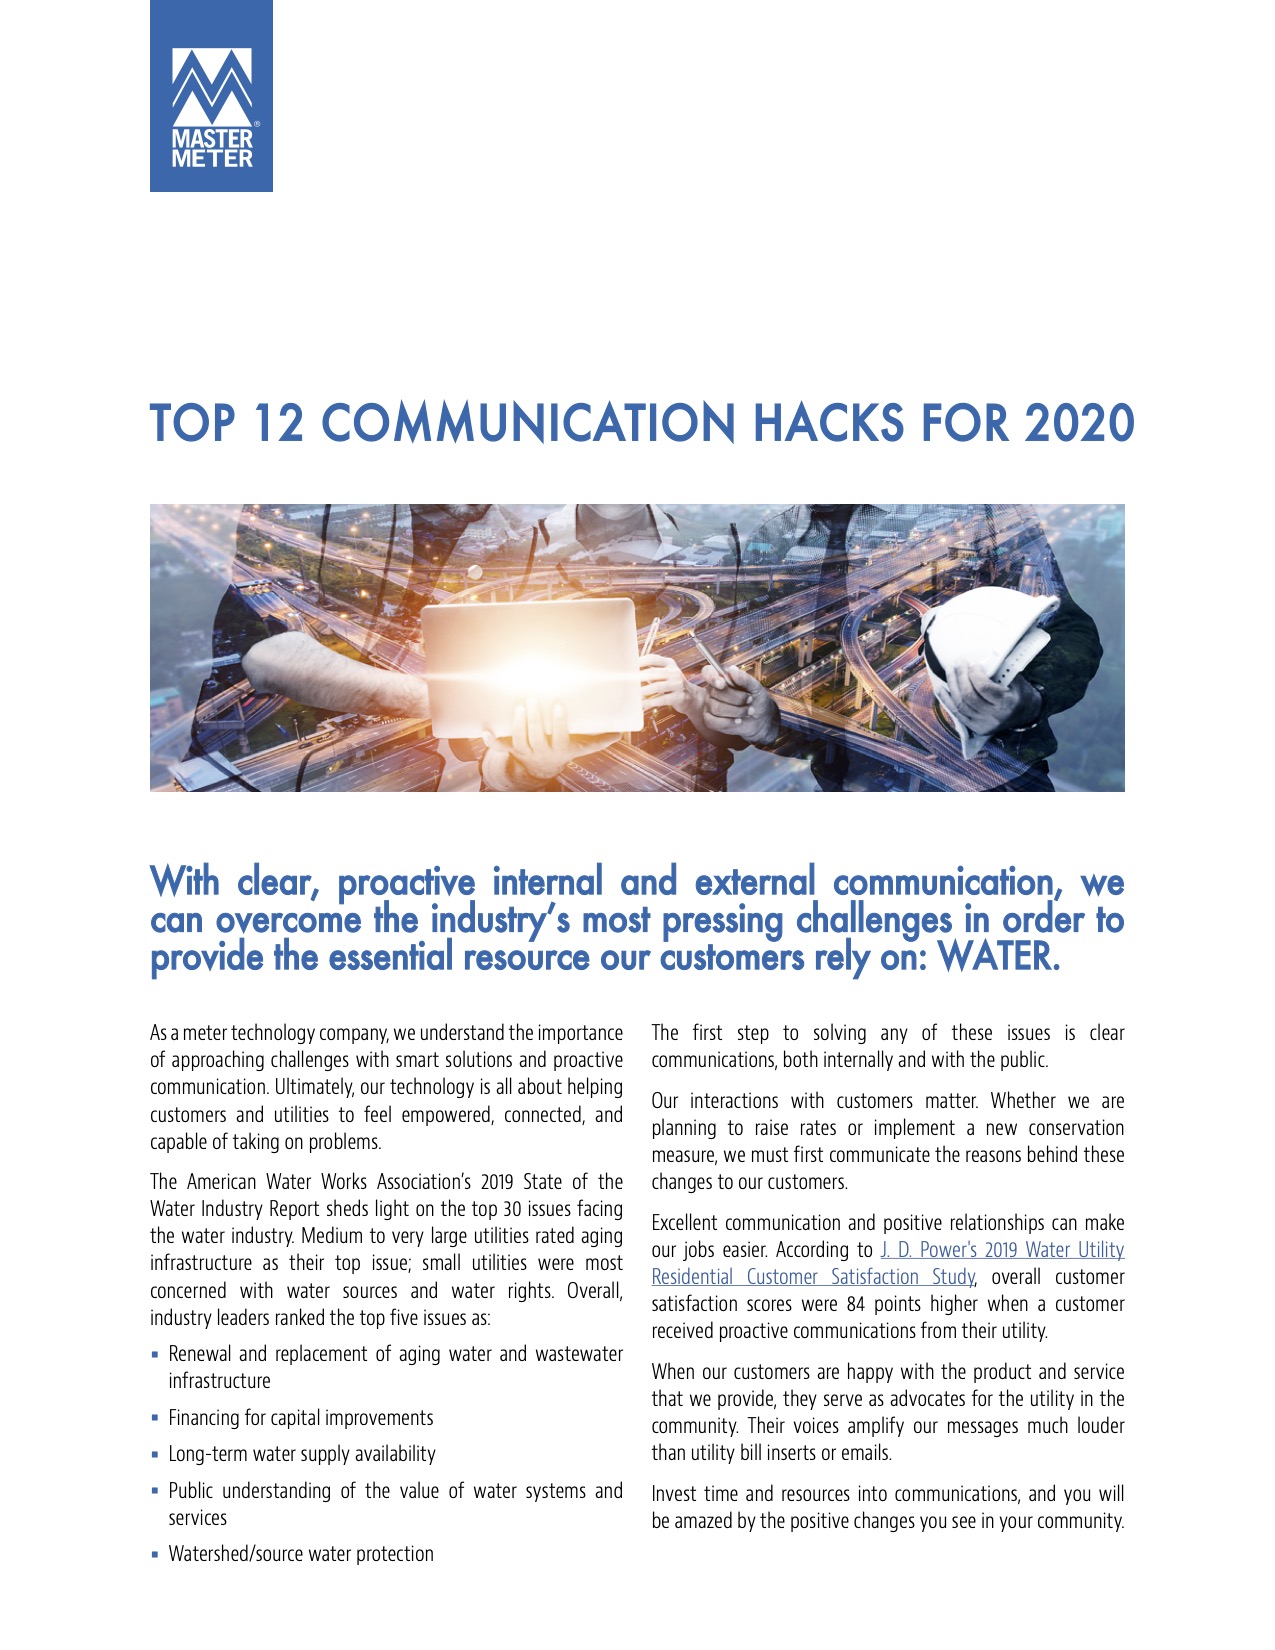 Top 12 Communication Hacks for 2020